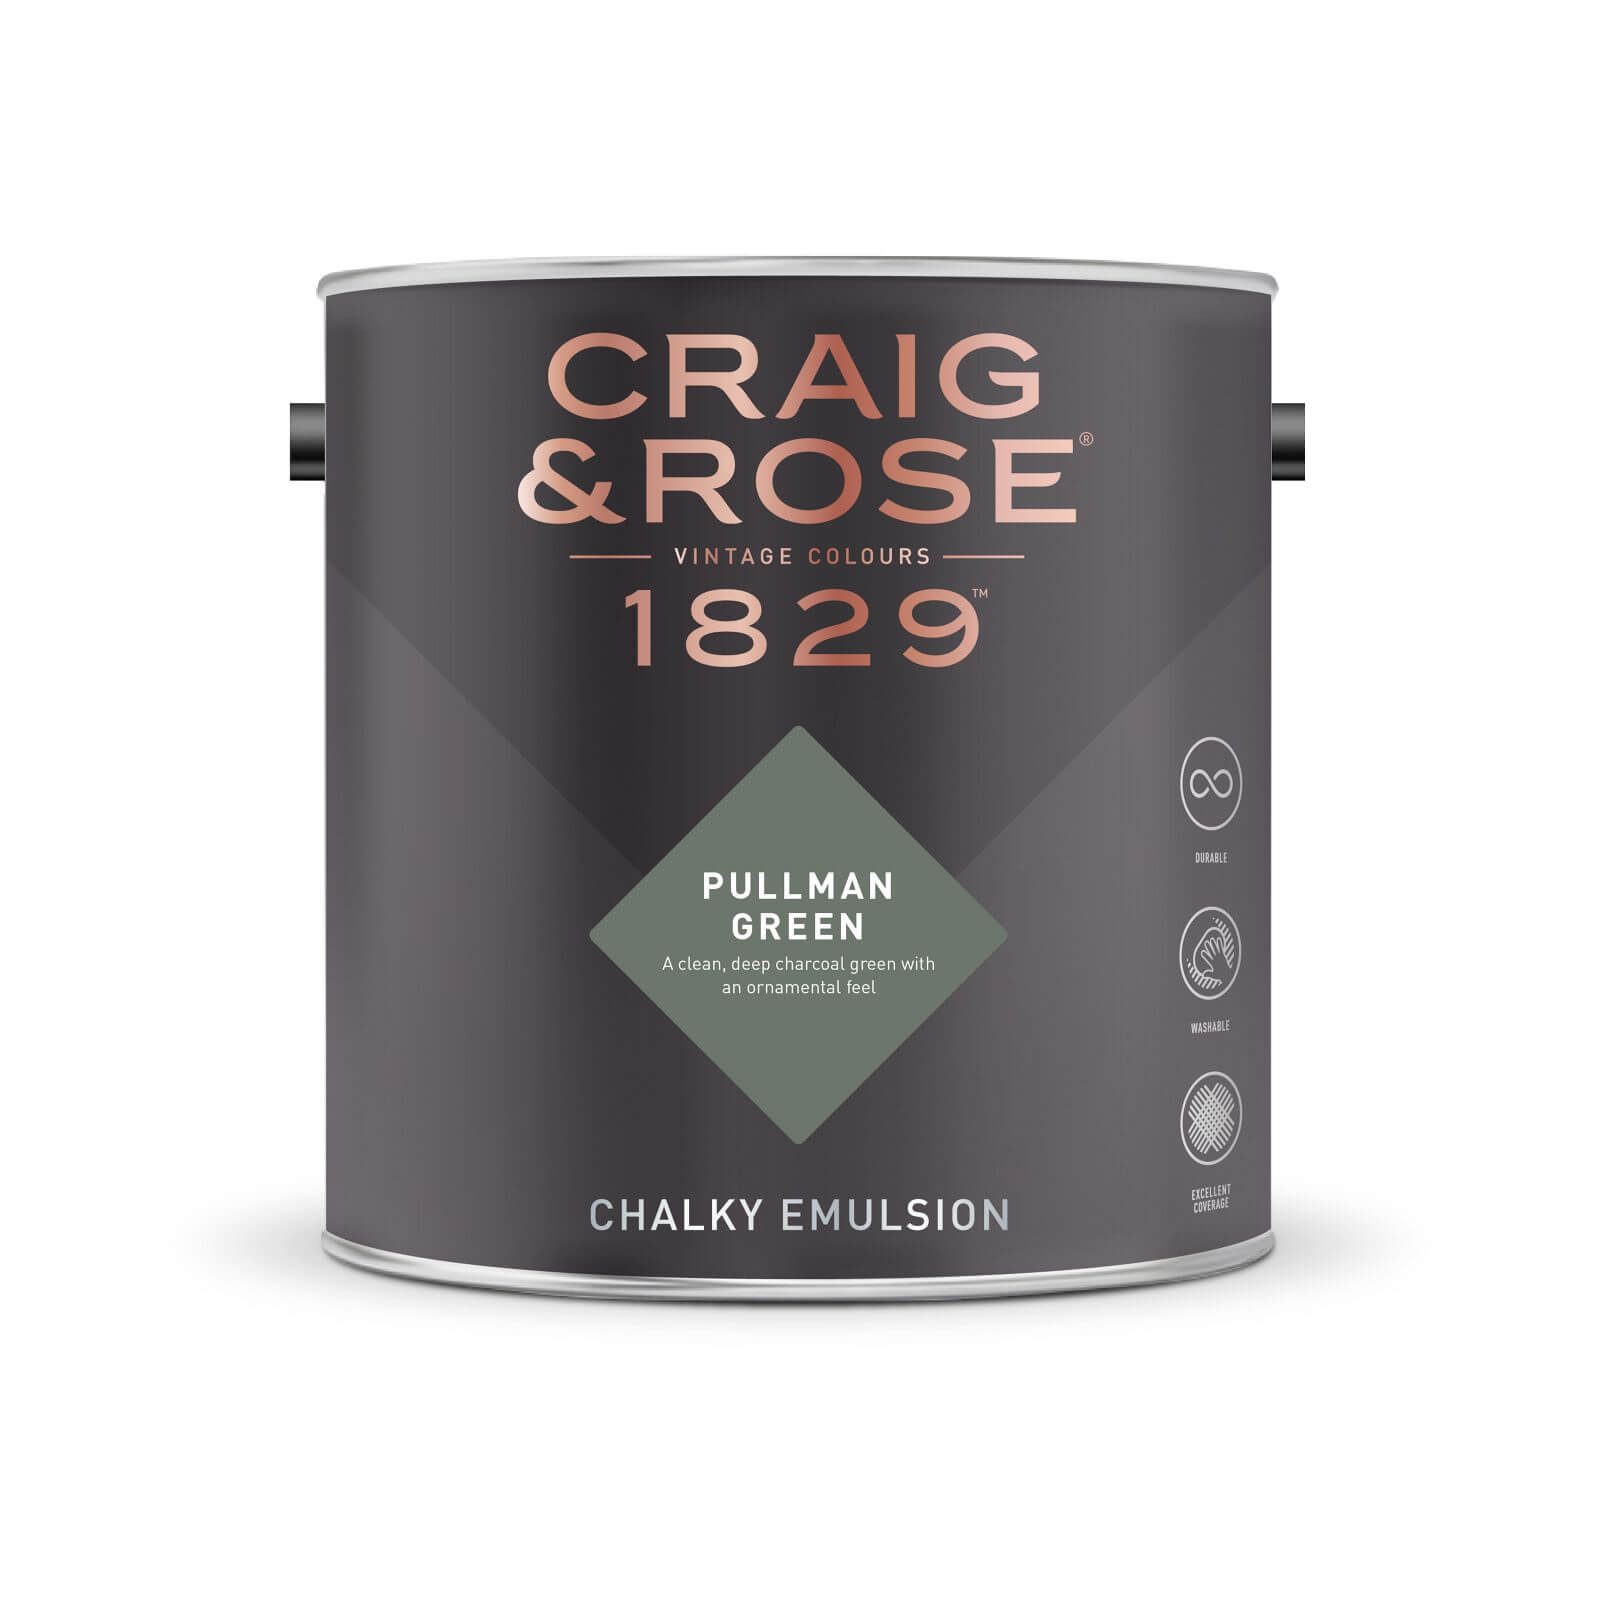 Craig & Rose 1829 Chalky Emulsion Paint Pullman Green - 5L